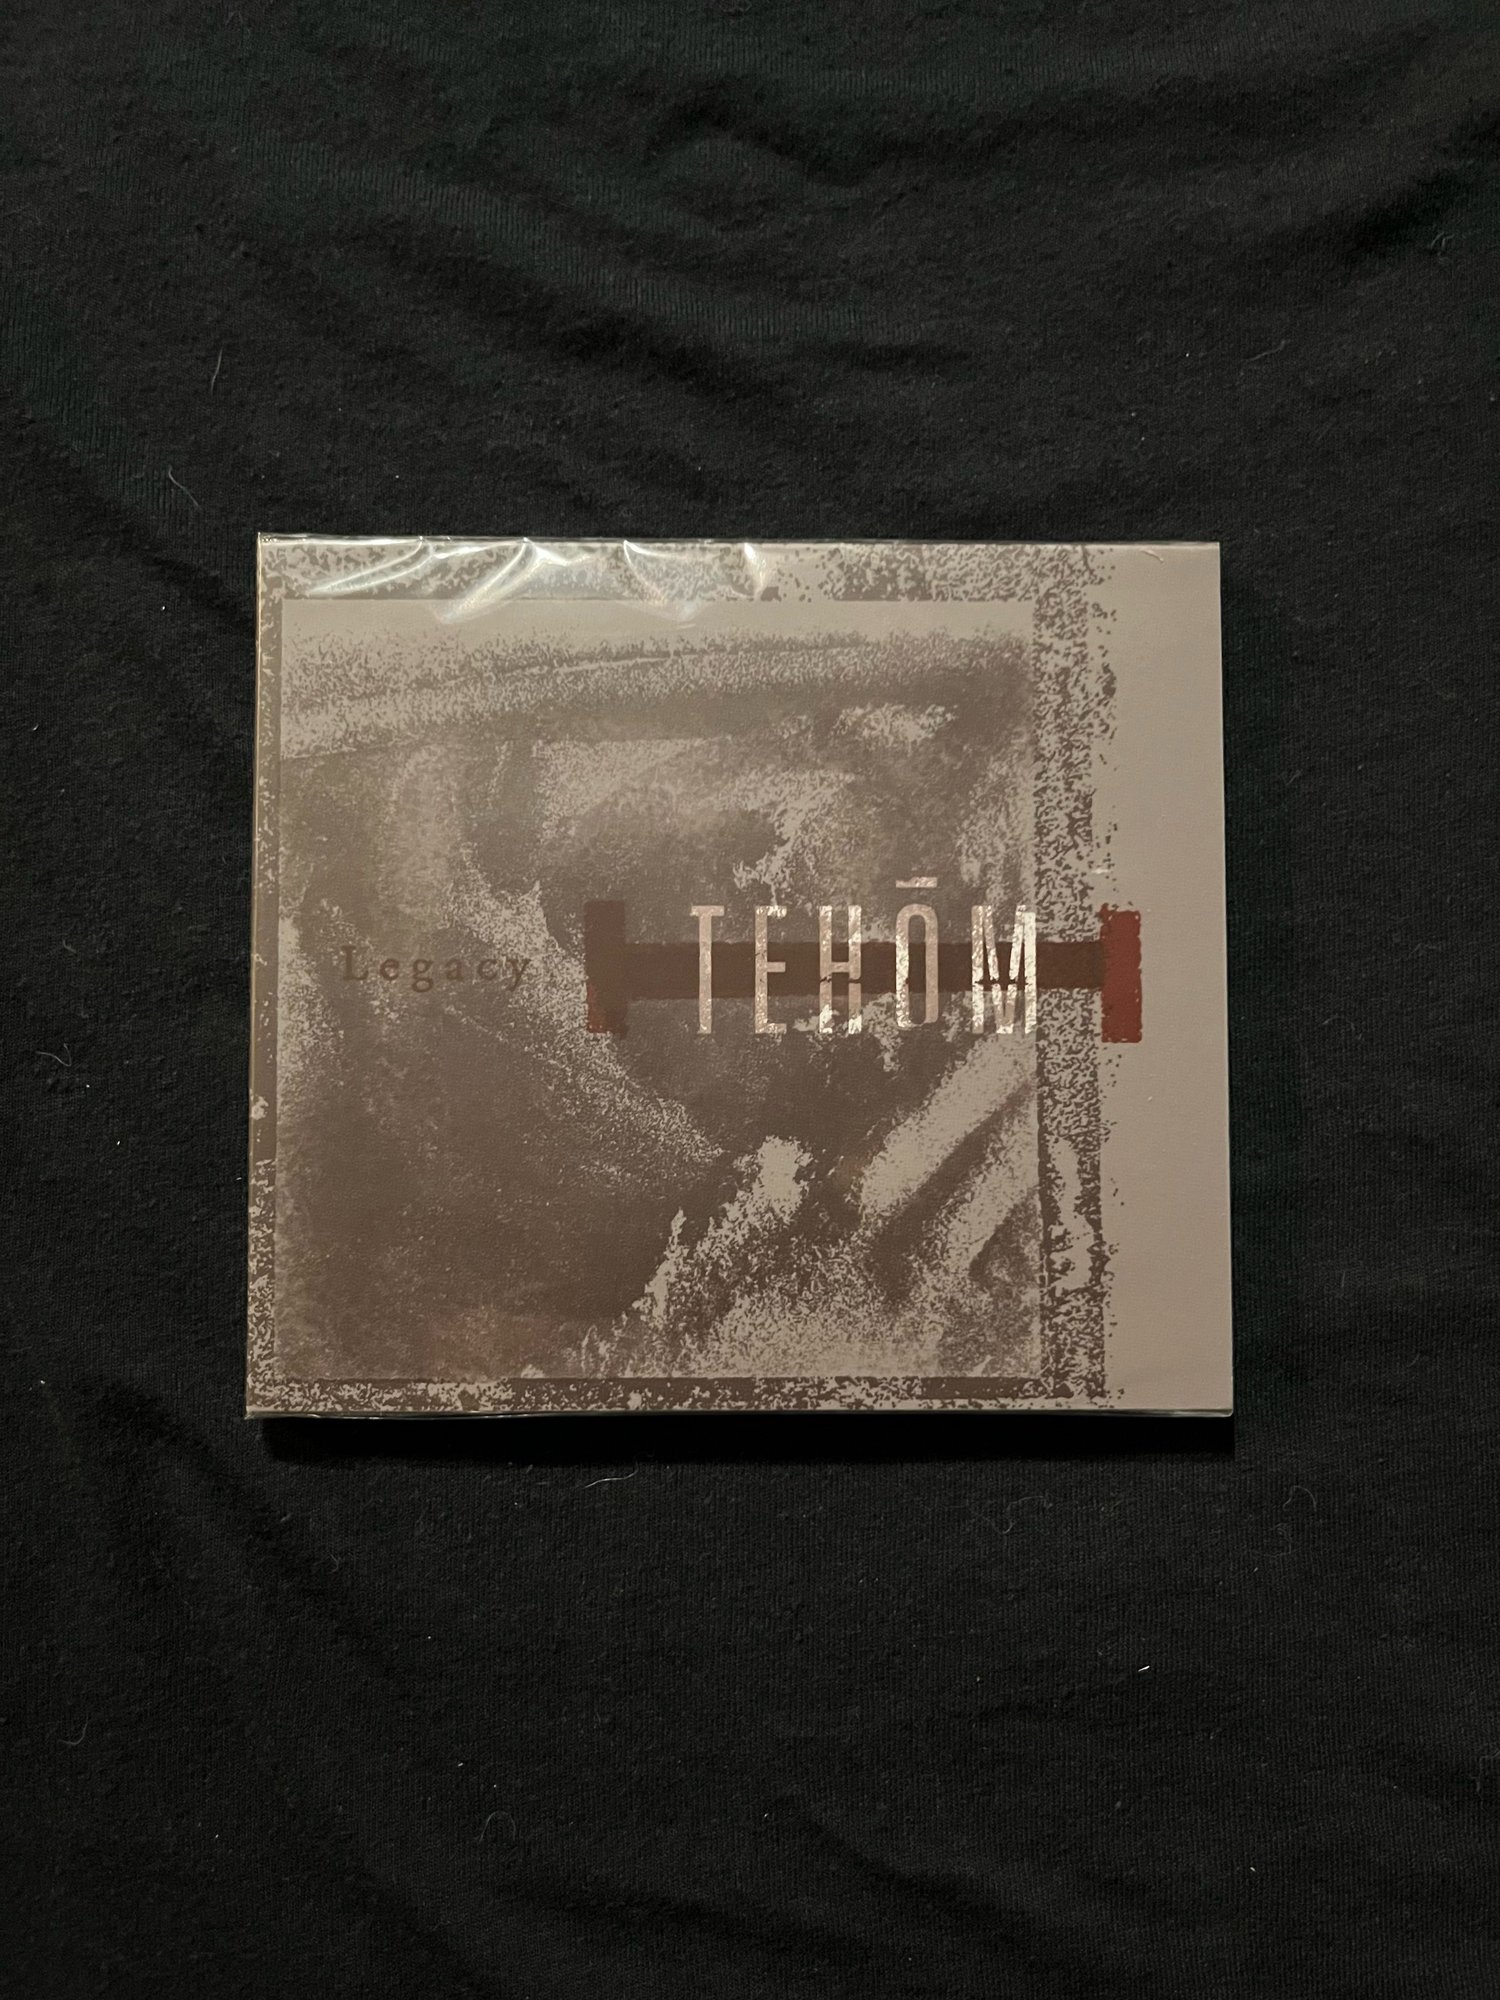 TeHÔM – Legacy CD (Cyclic Law)